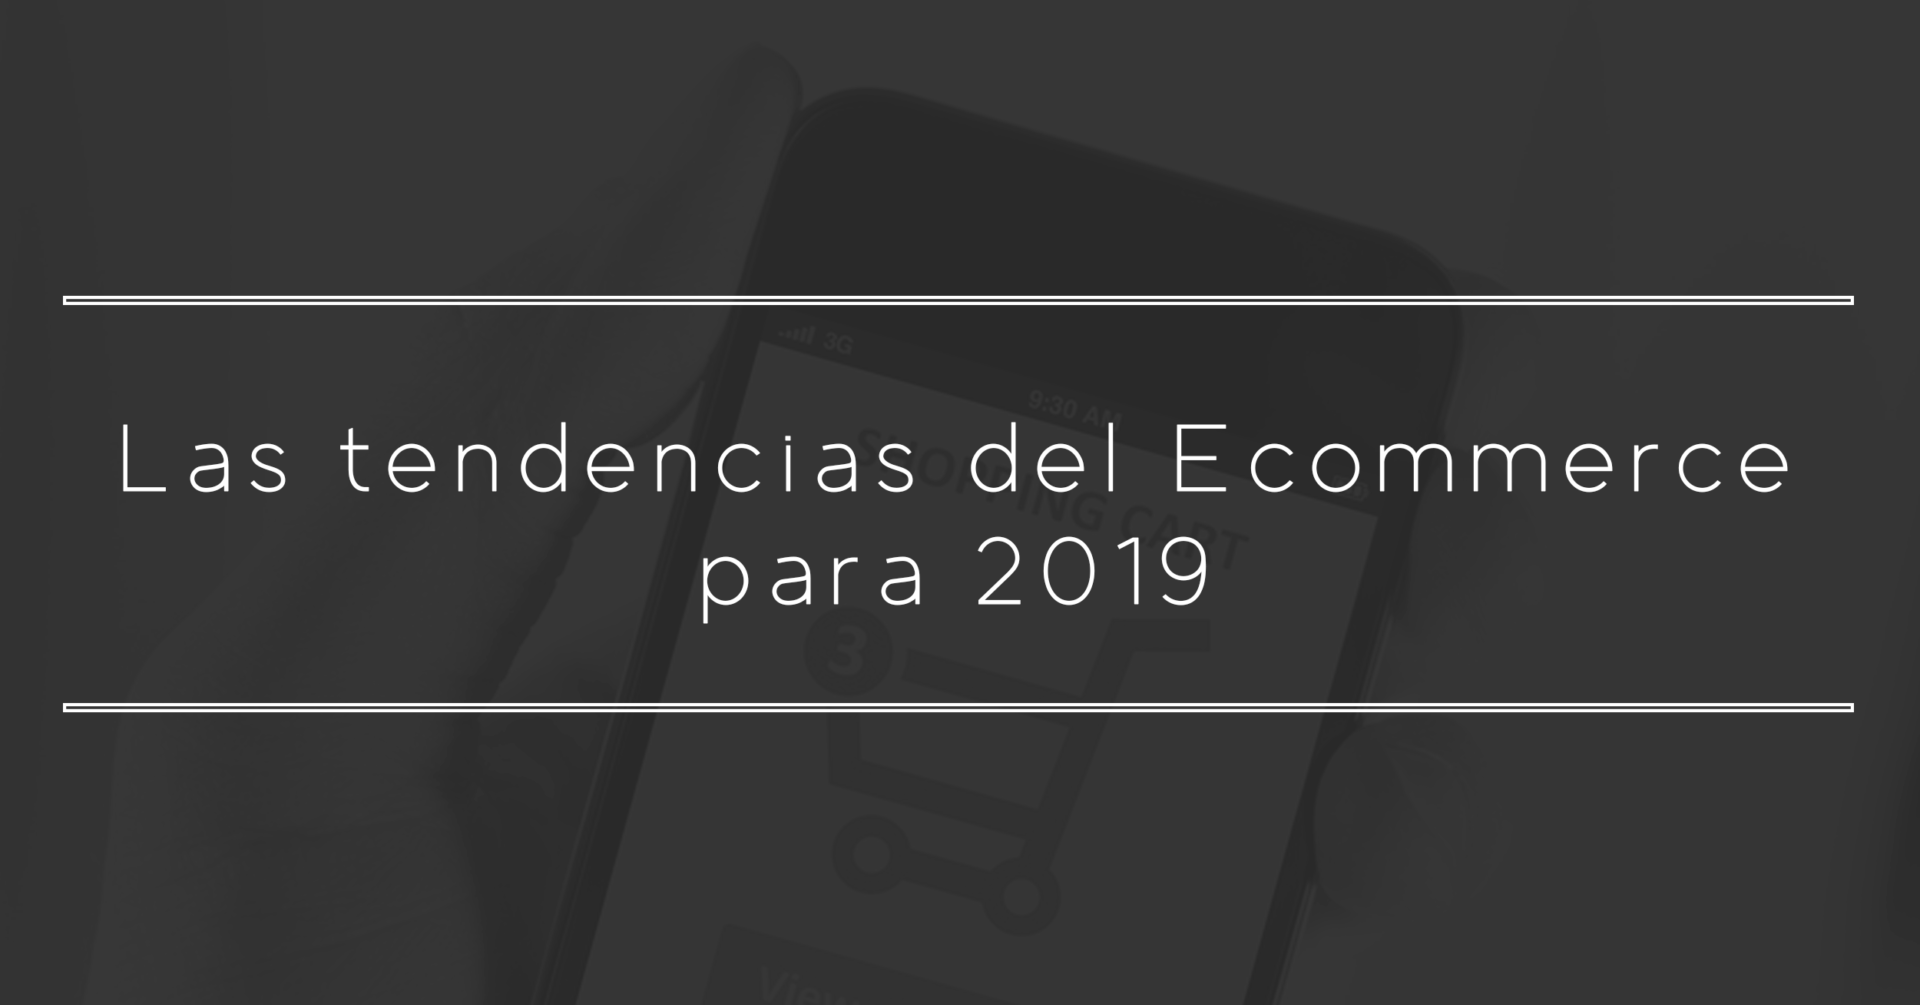 ecommerce 2019